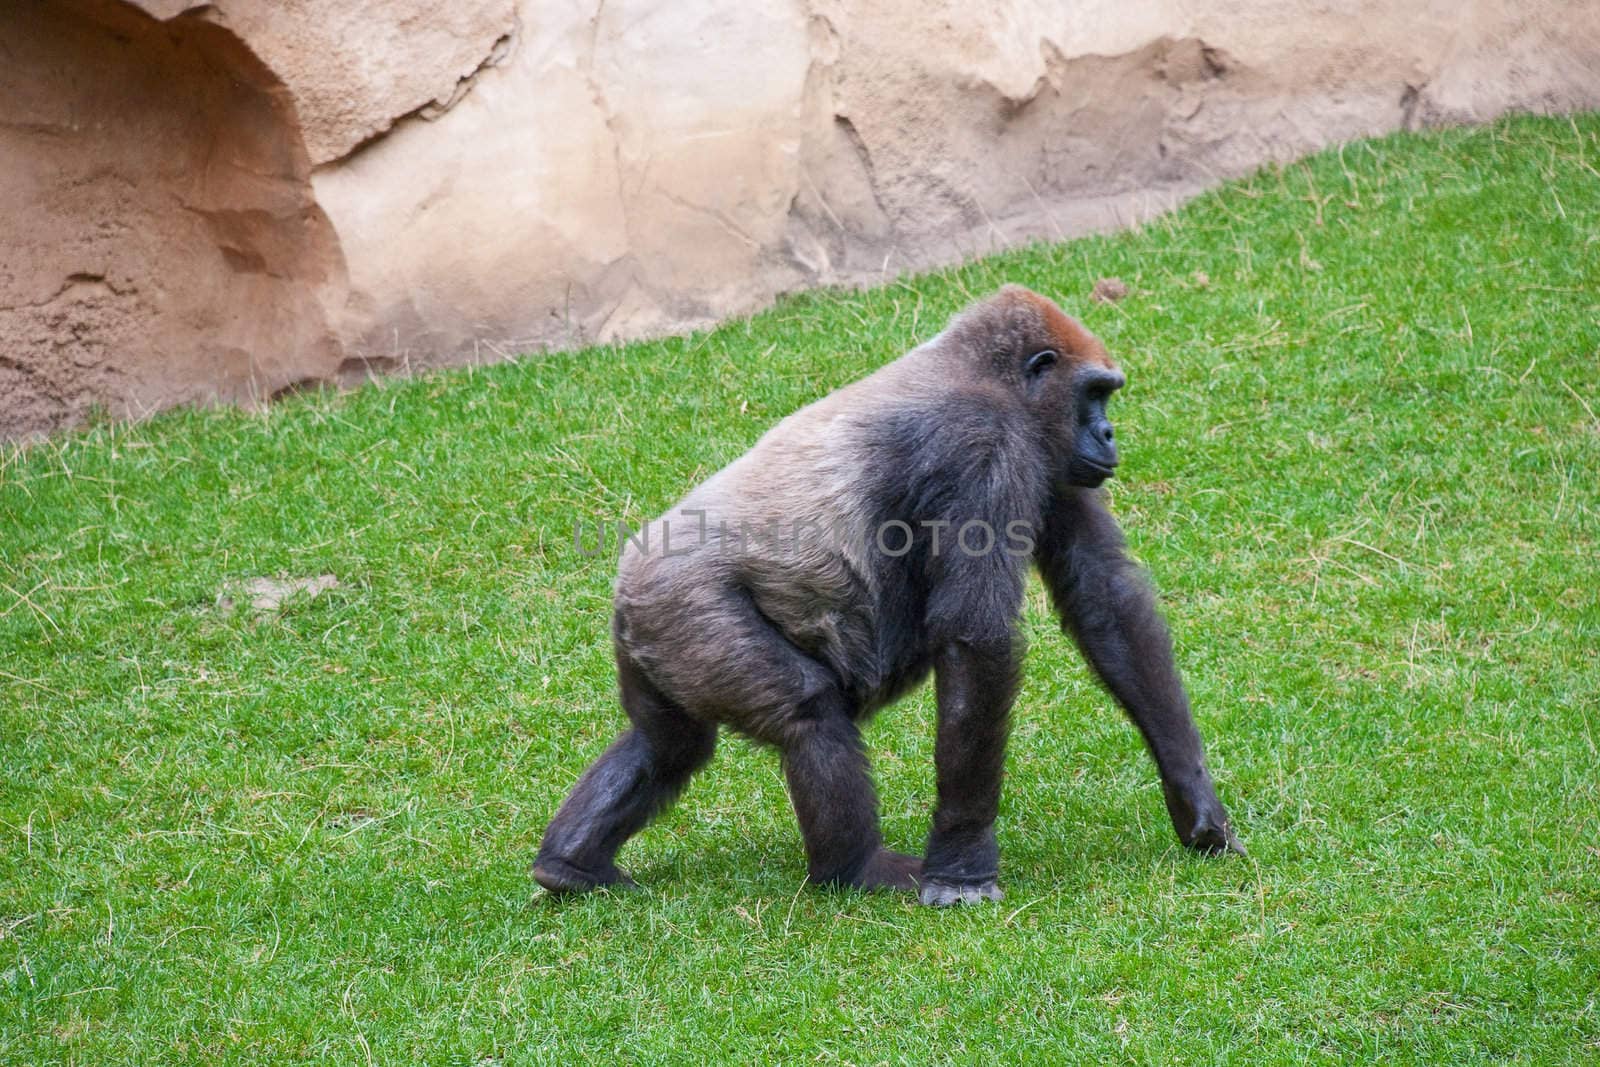 Silverback Gorilla by y_serge